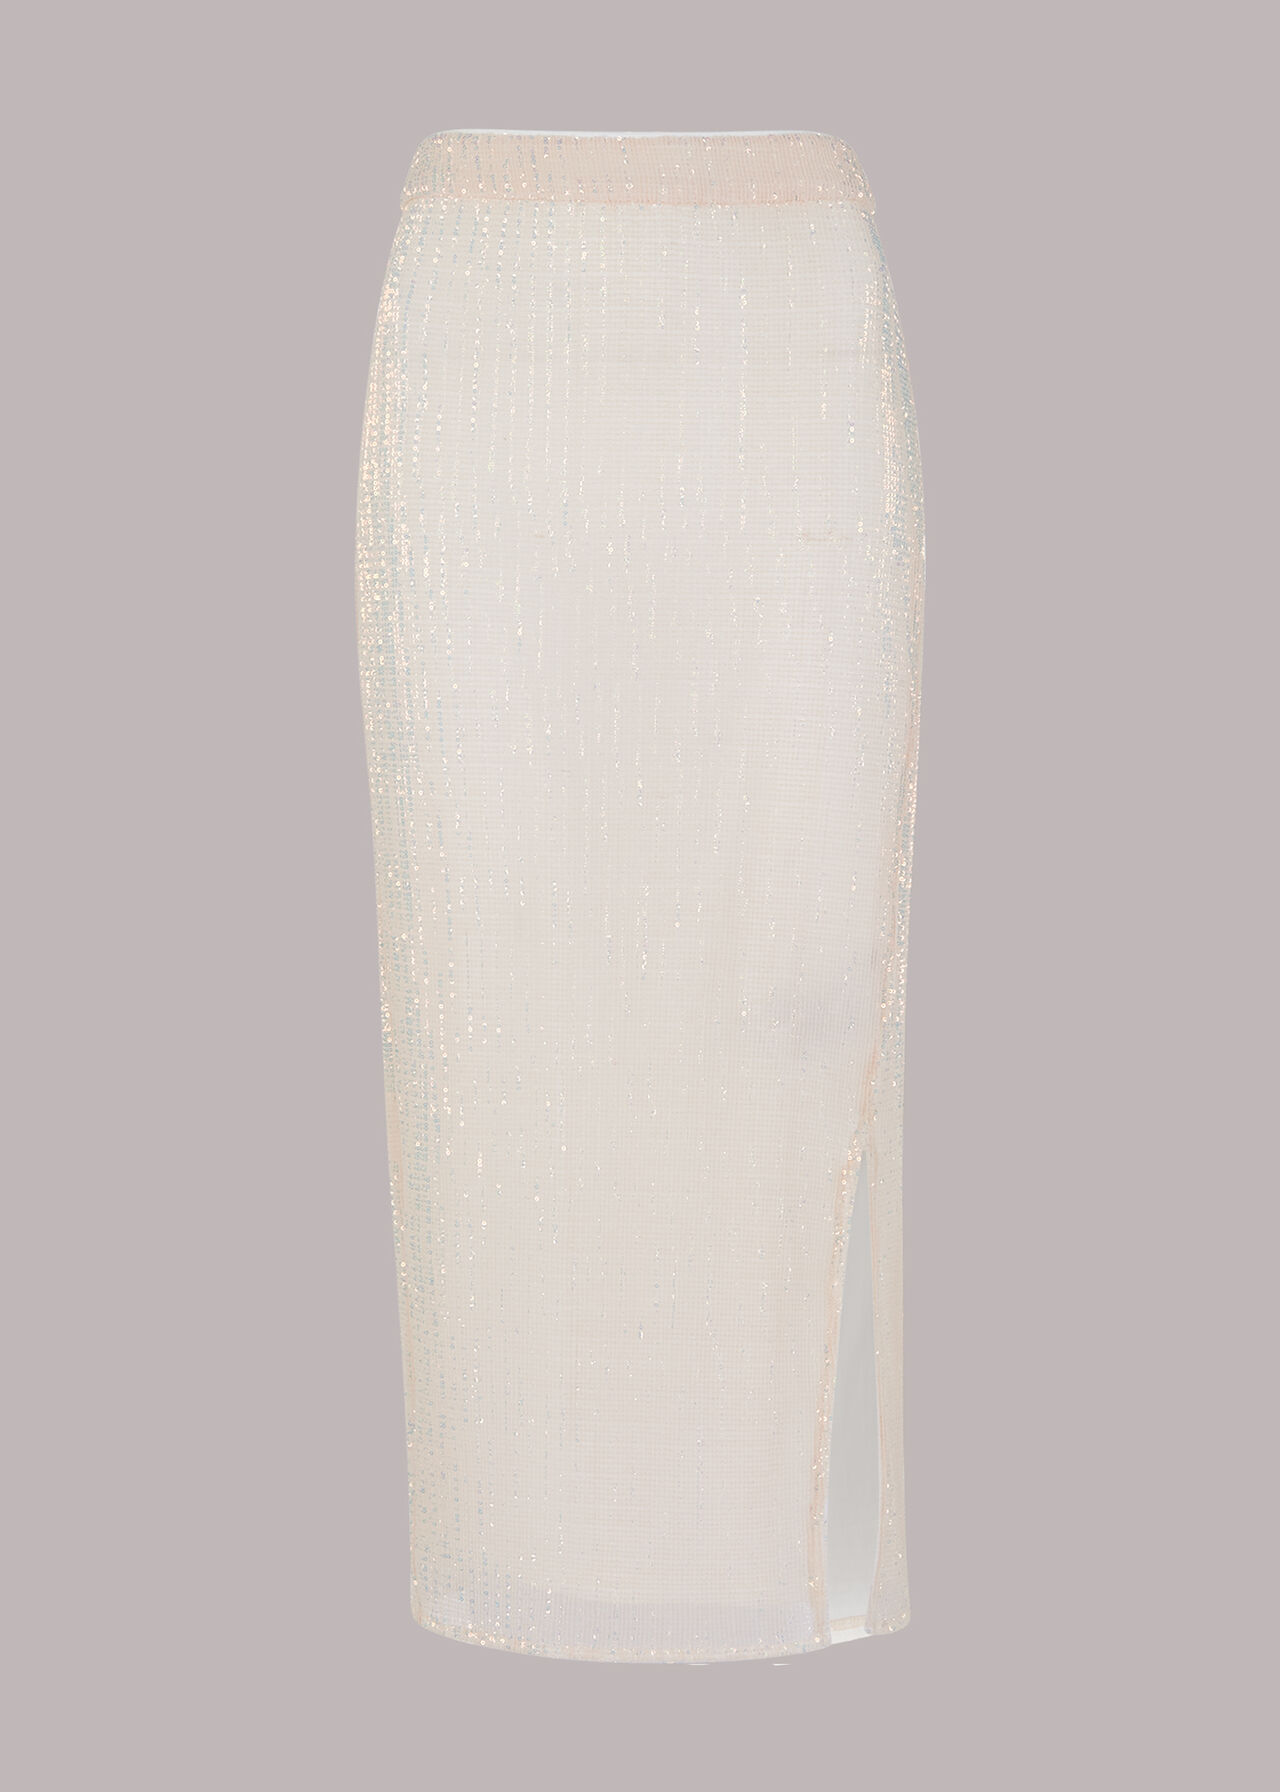 Sadie Sequin Column Skirt